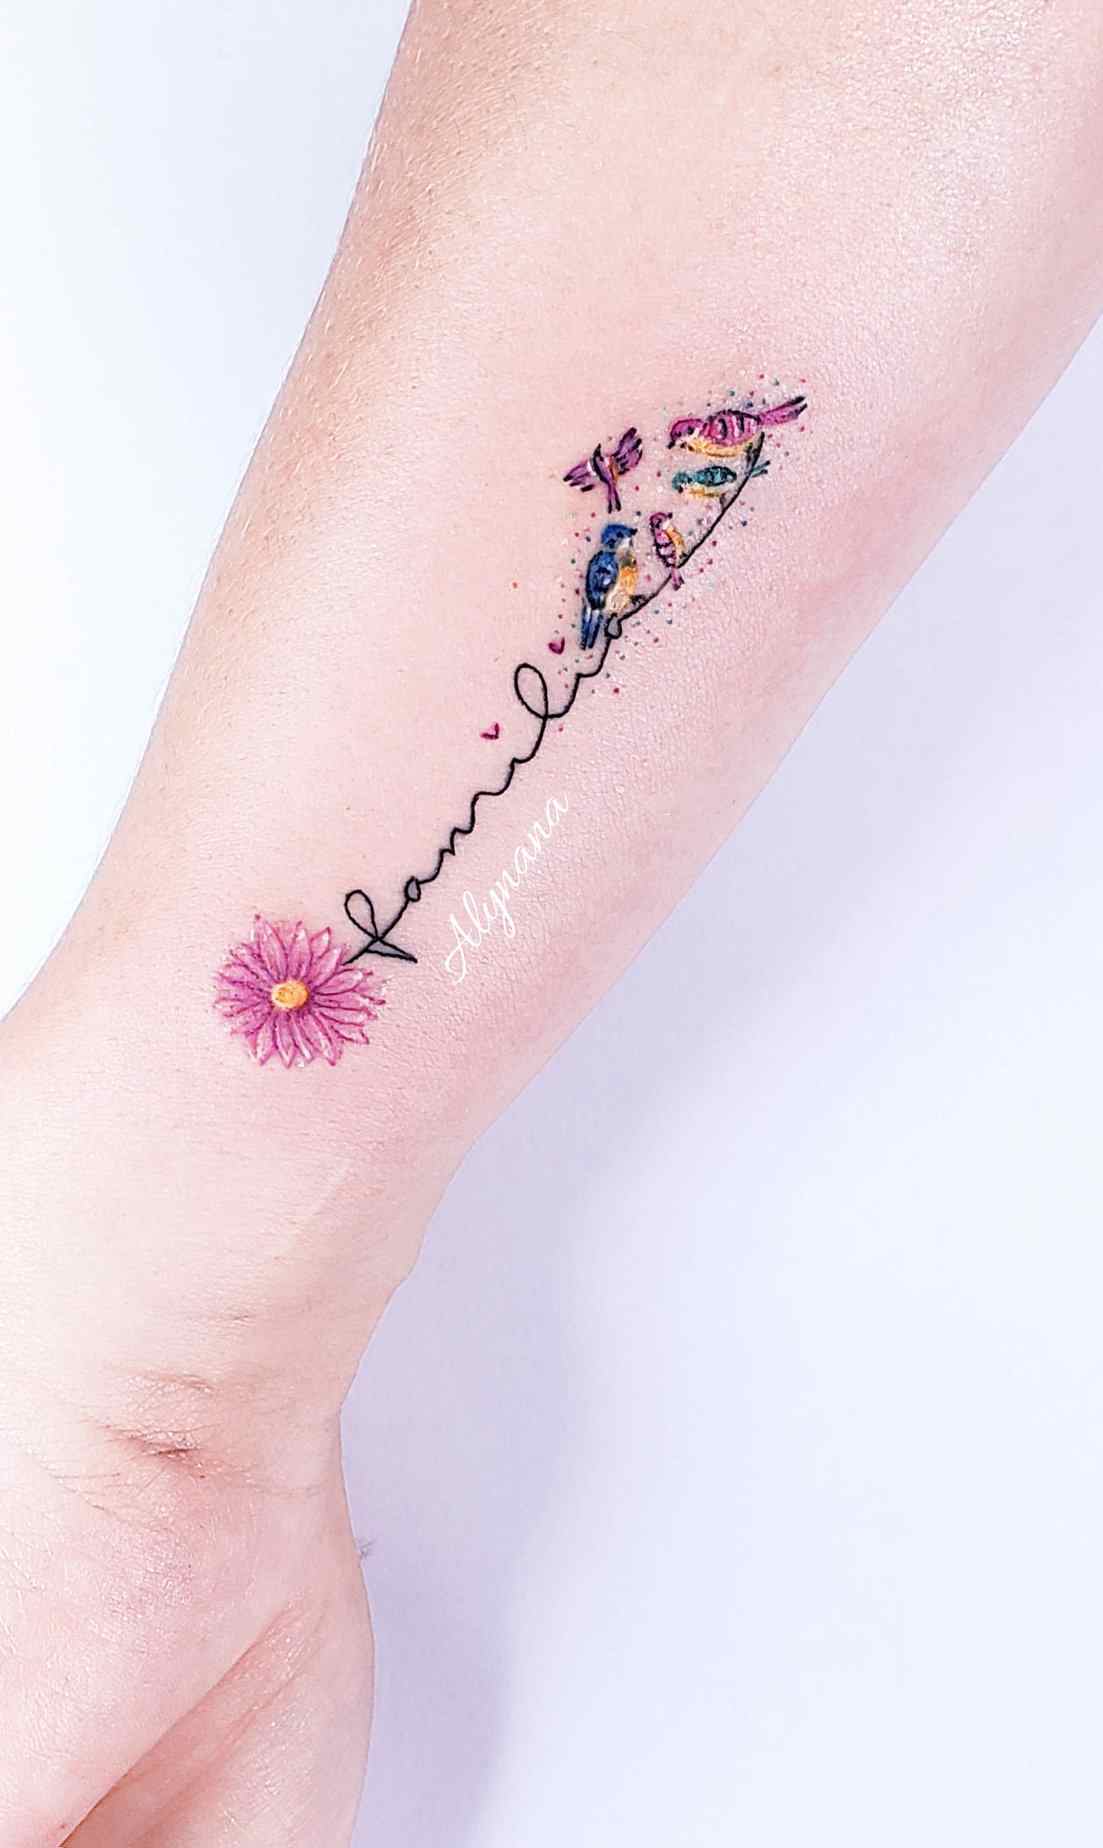 100 Tatuajes Delicados Coloridos Artista Alynana Familia representada con aves en al antebrazo con flores